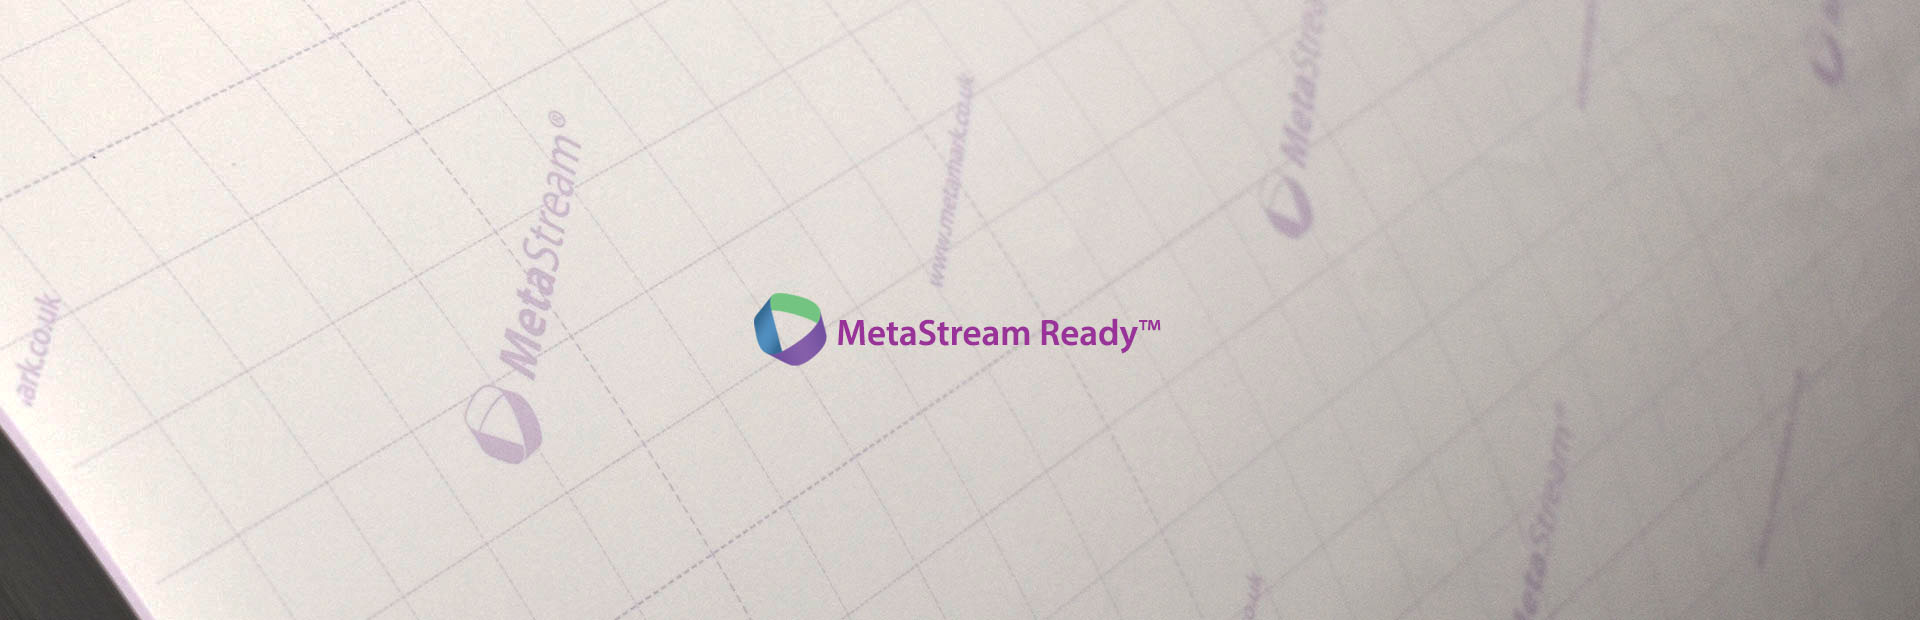 MetaStream Ready™️